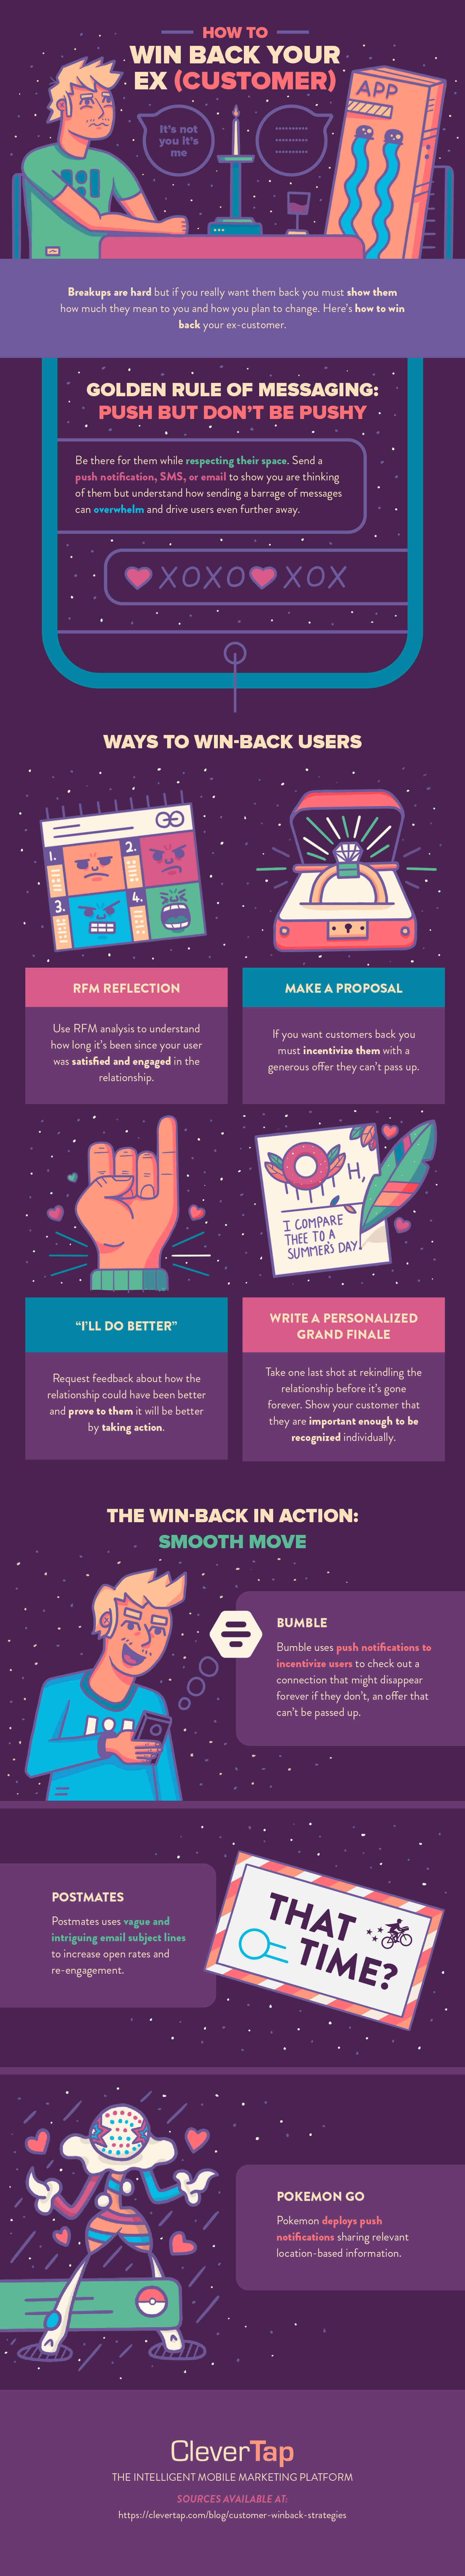 Customer Win back Strategies infographic